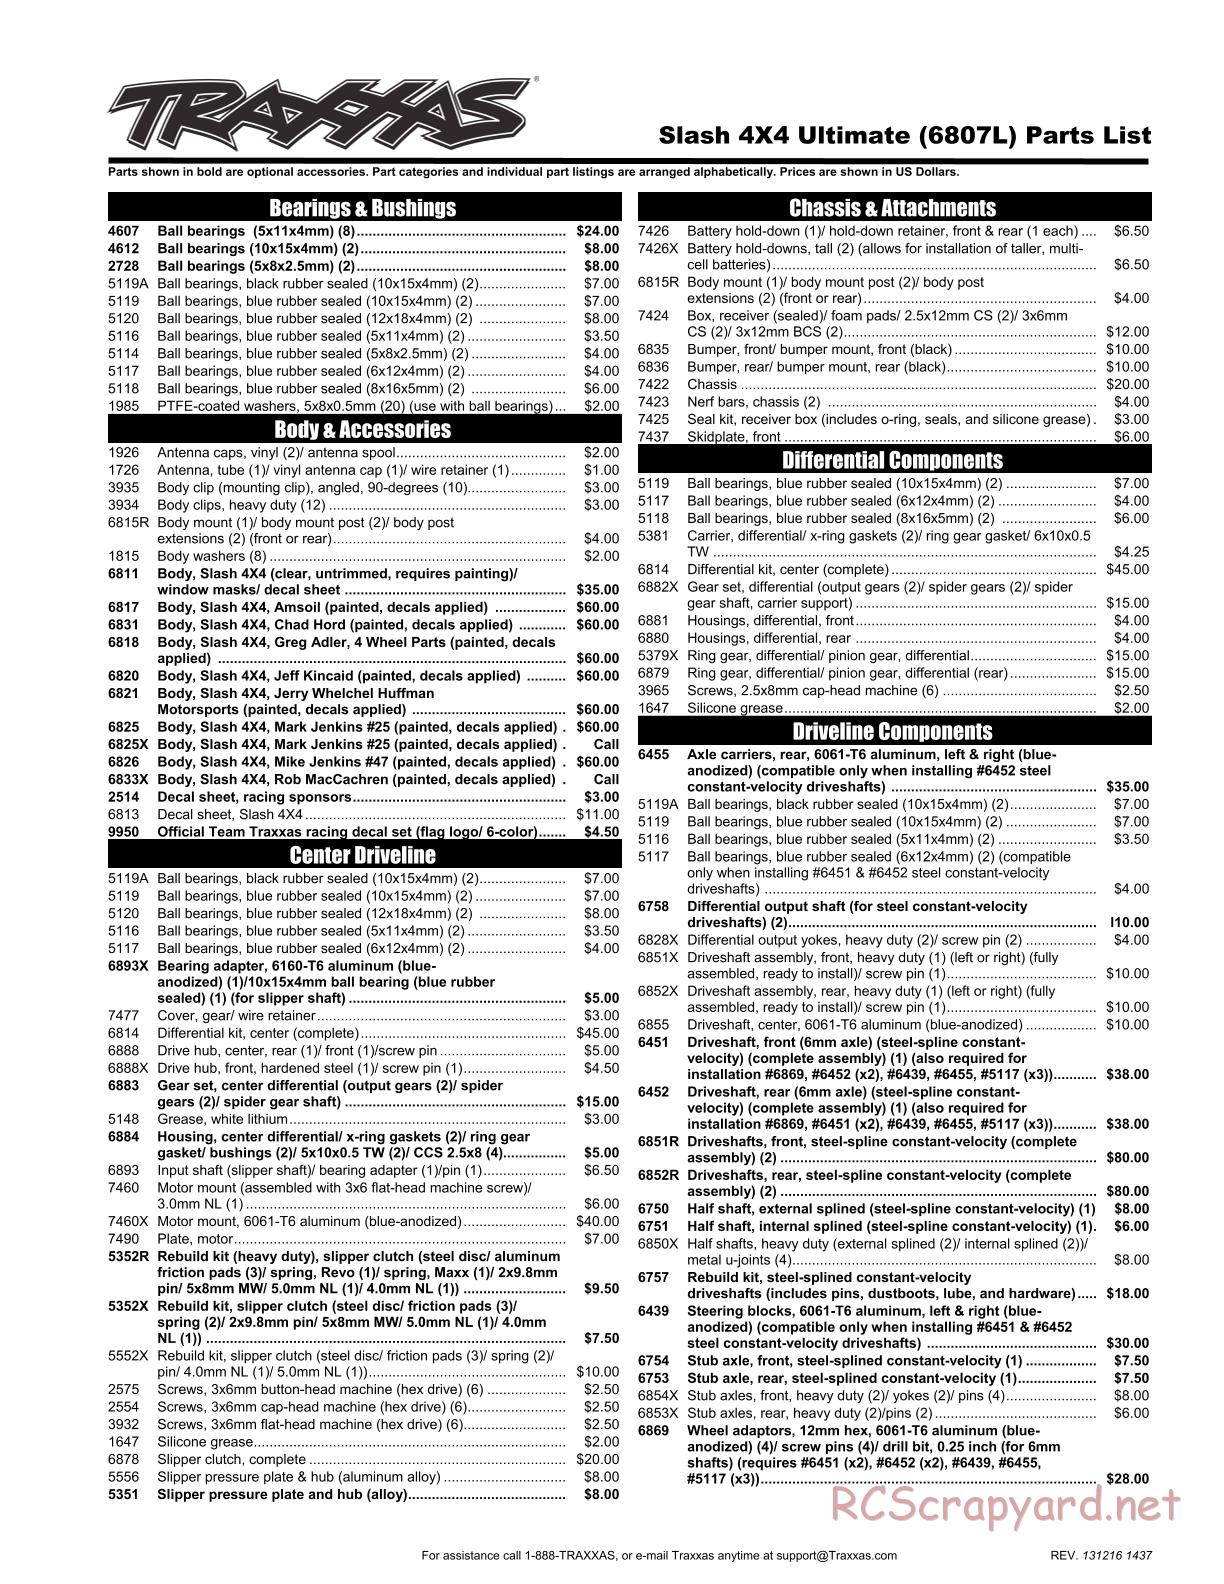 Traxxas - Slash 4x4 Ultimate LiPo (2012) - Parts List - Page 1